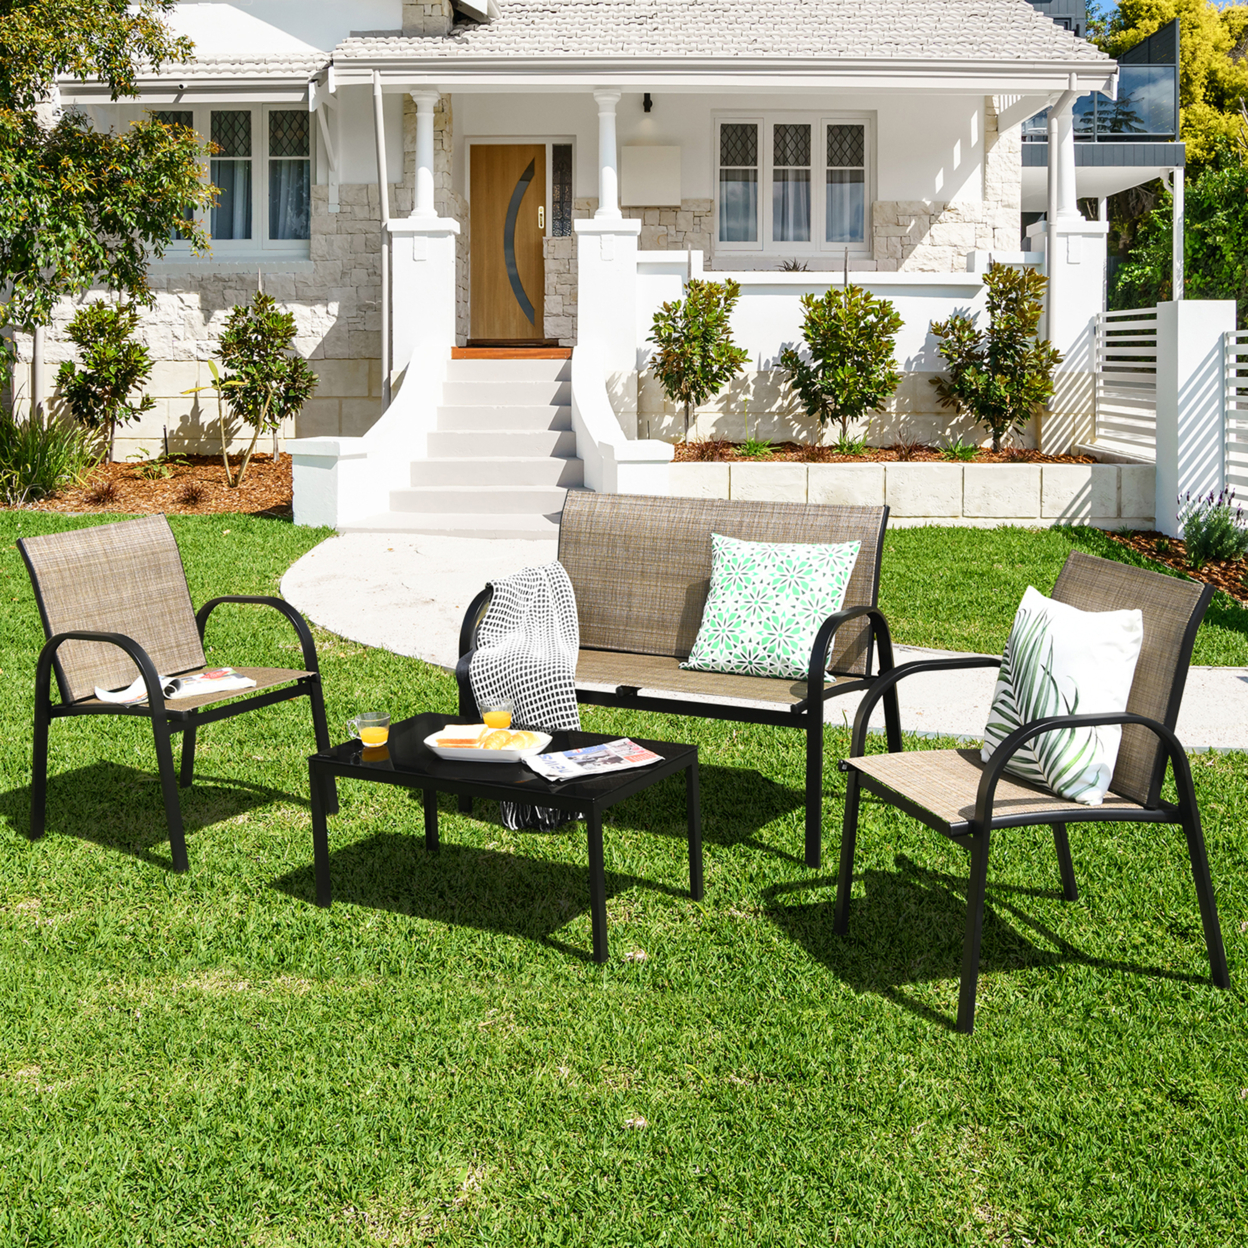 4PCS Patio Conversation Furniture Set All-Weather Garden Outdoor Brown